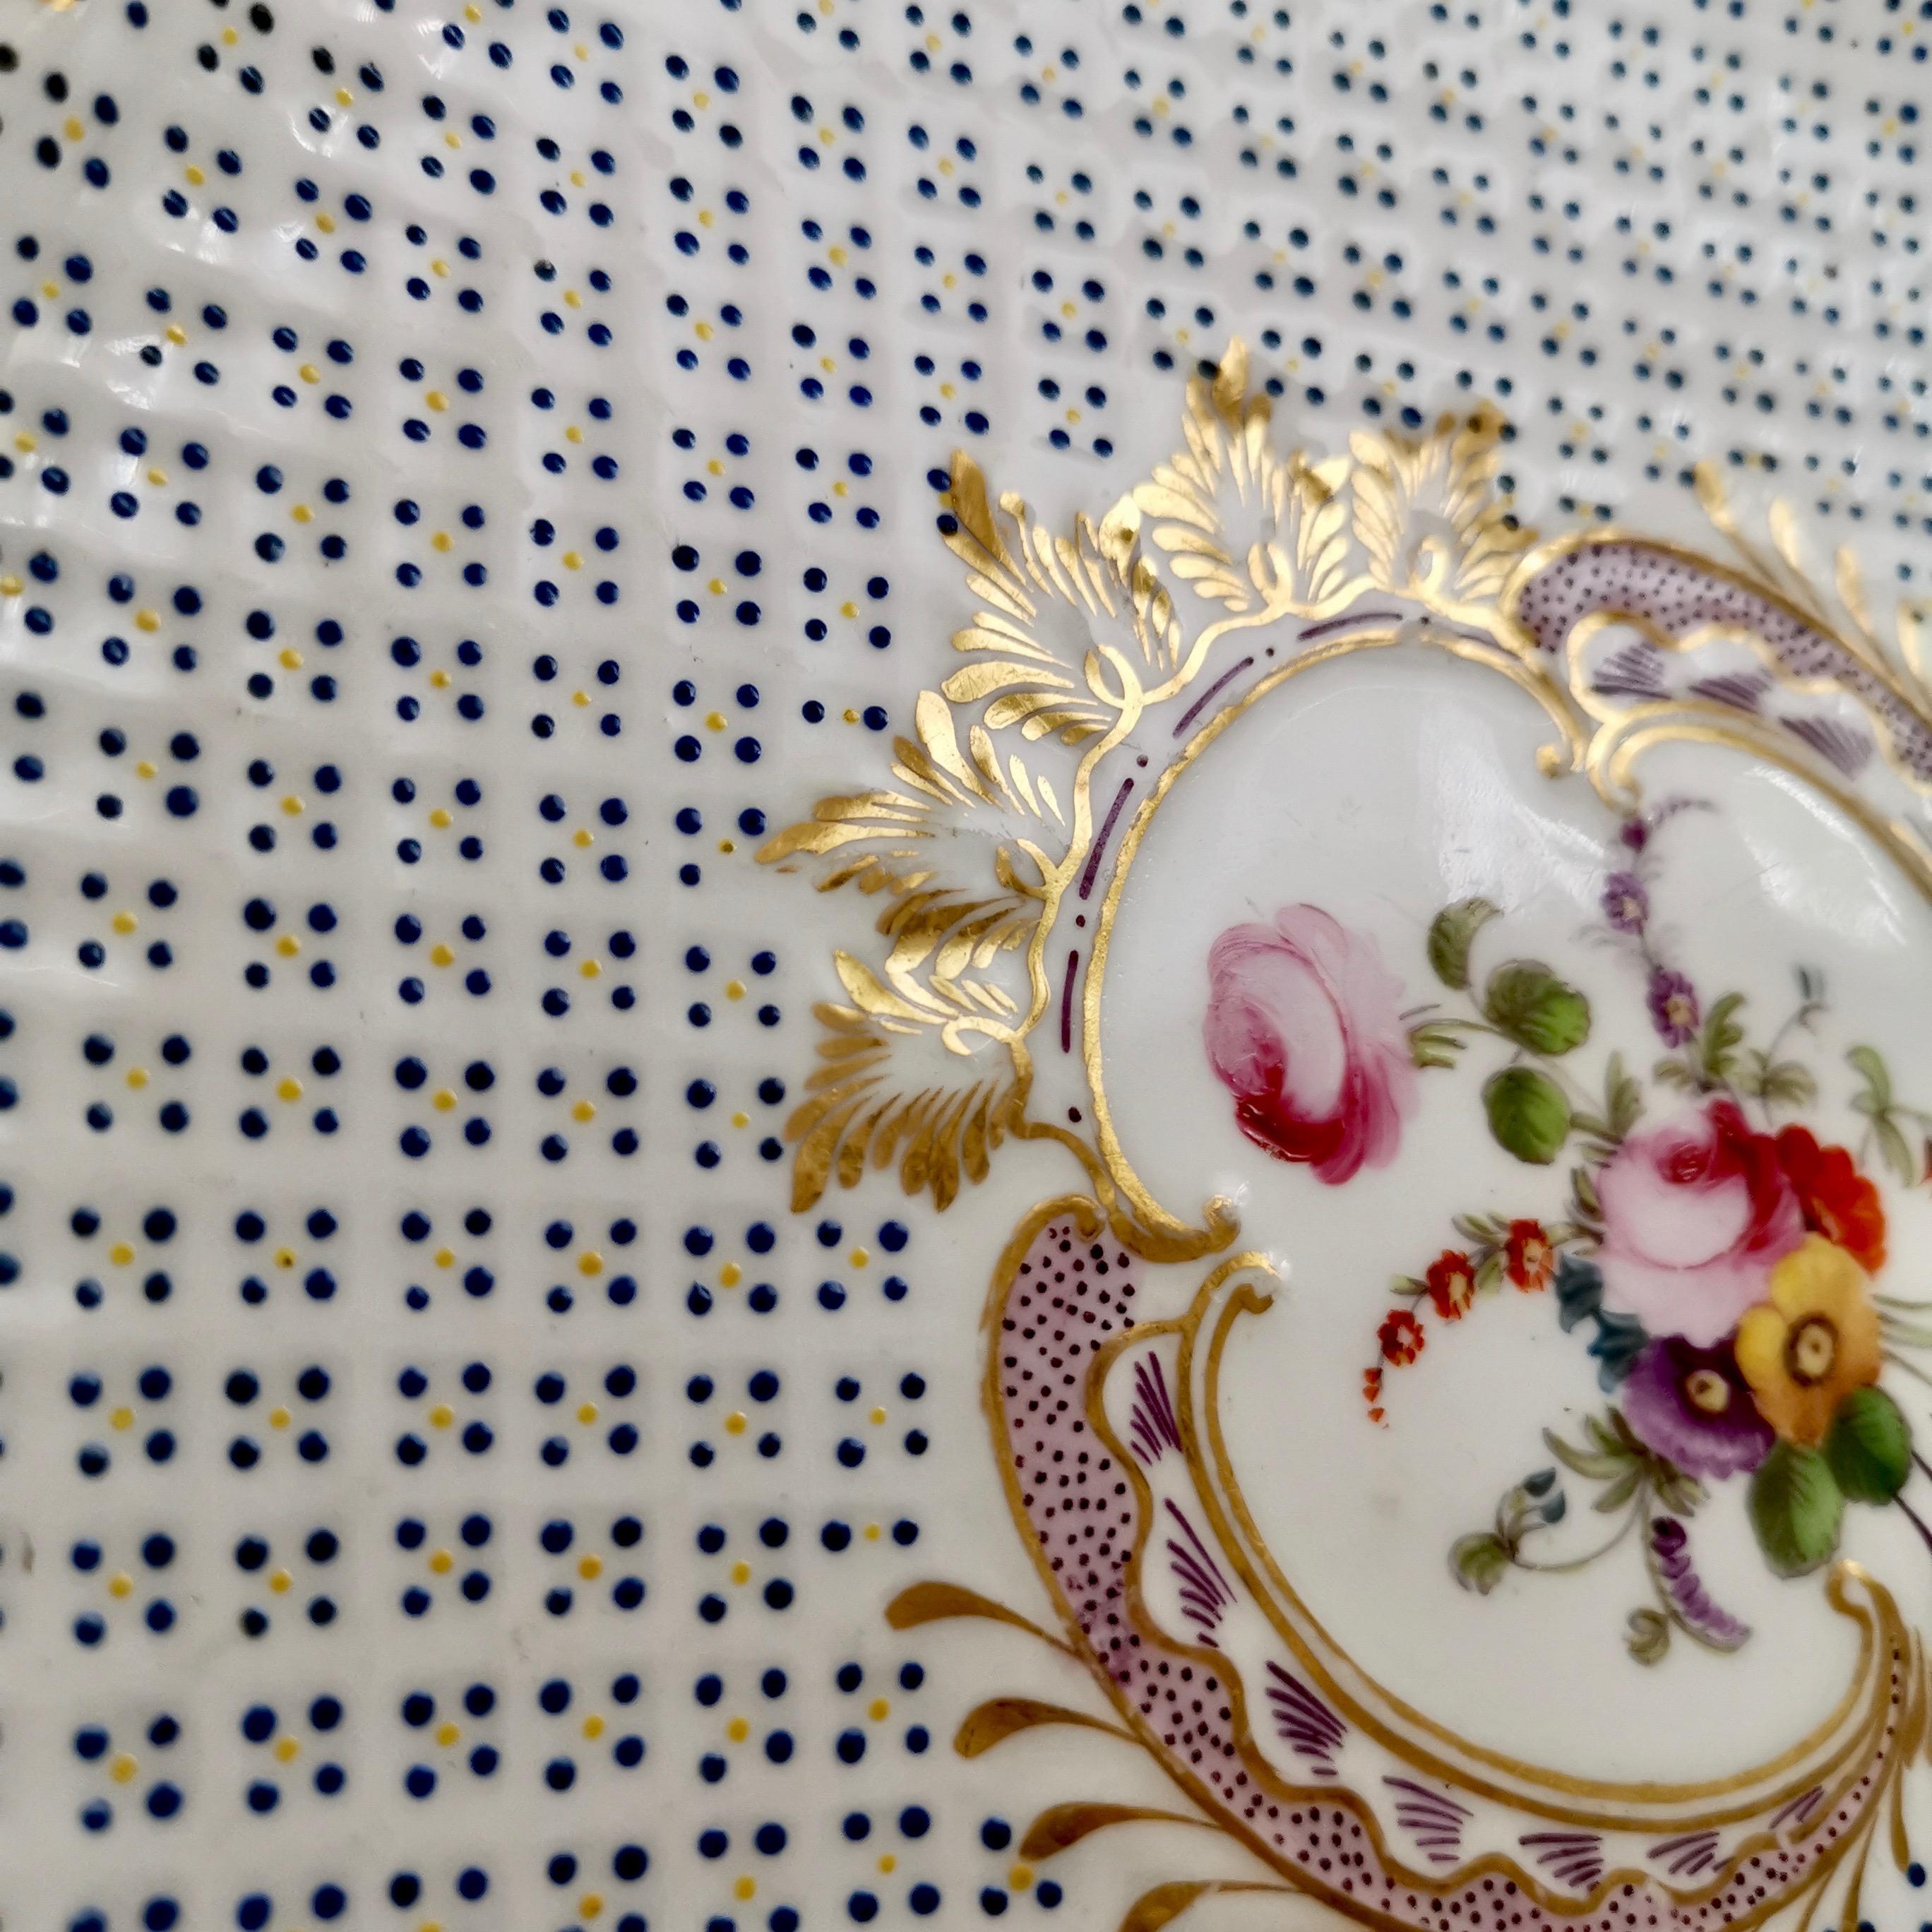 Coalport Porcelain Plate, Moulded Surface, White, Blue, Flowers, Regency ca 1820 4